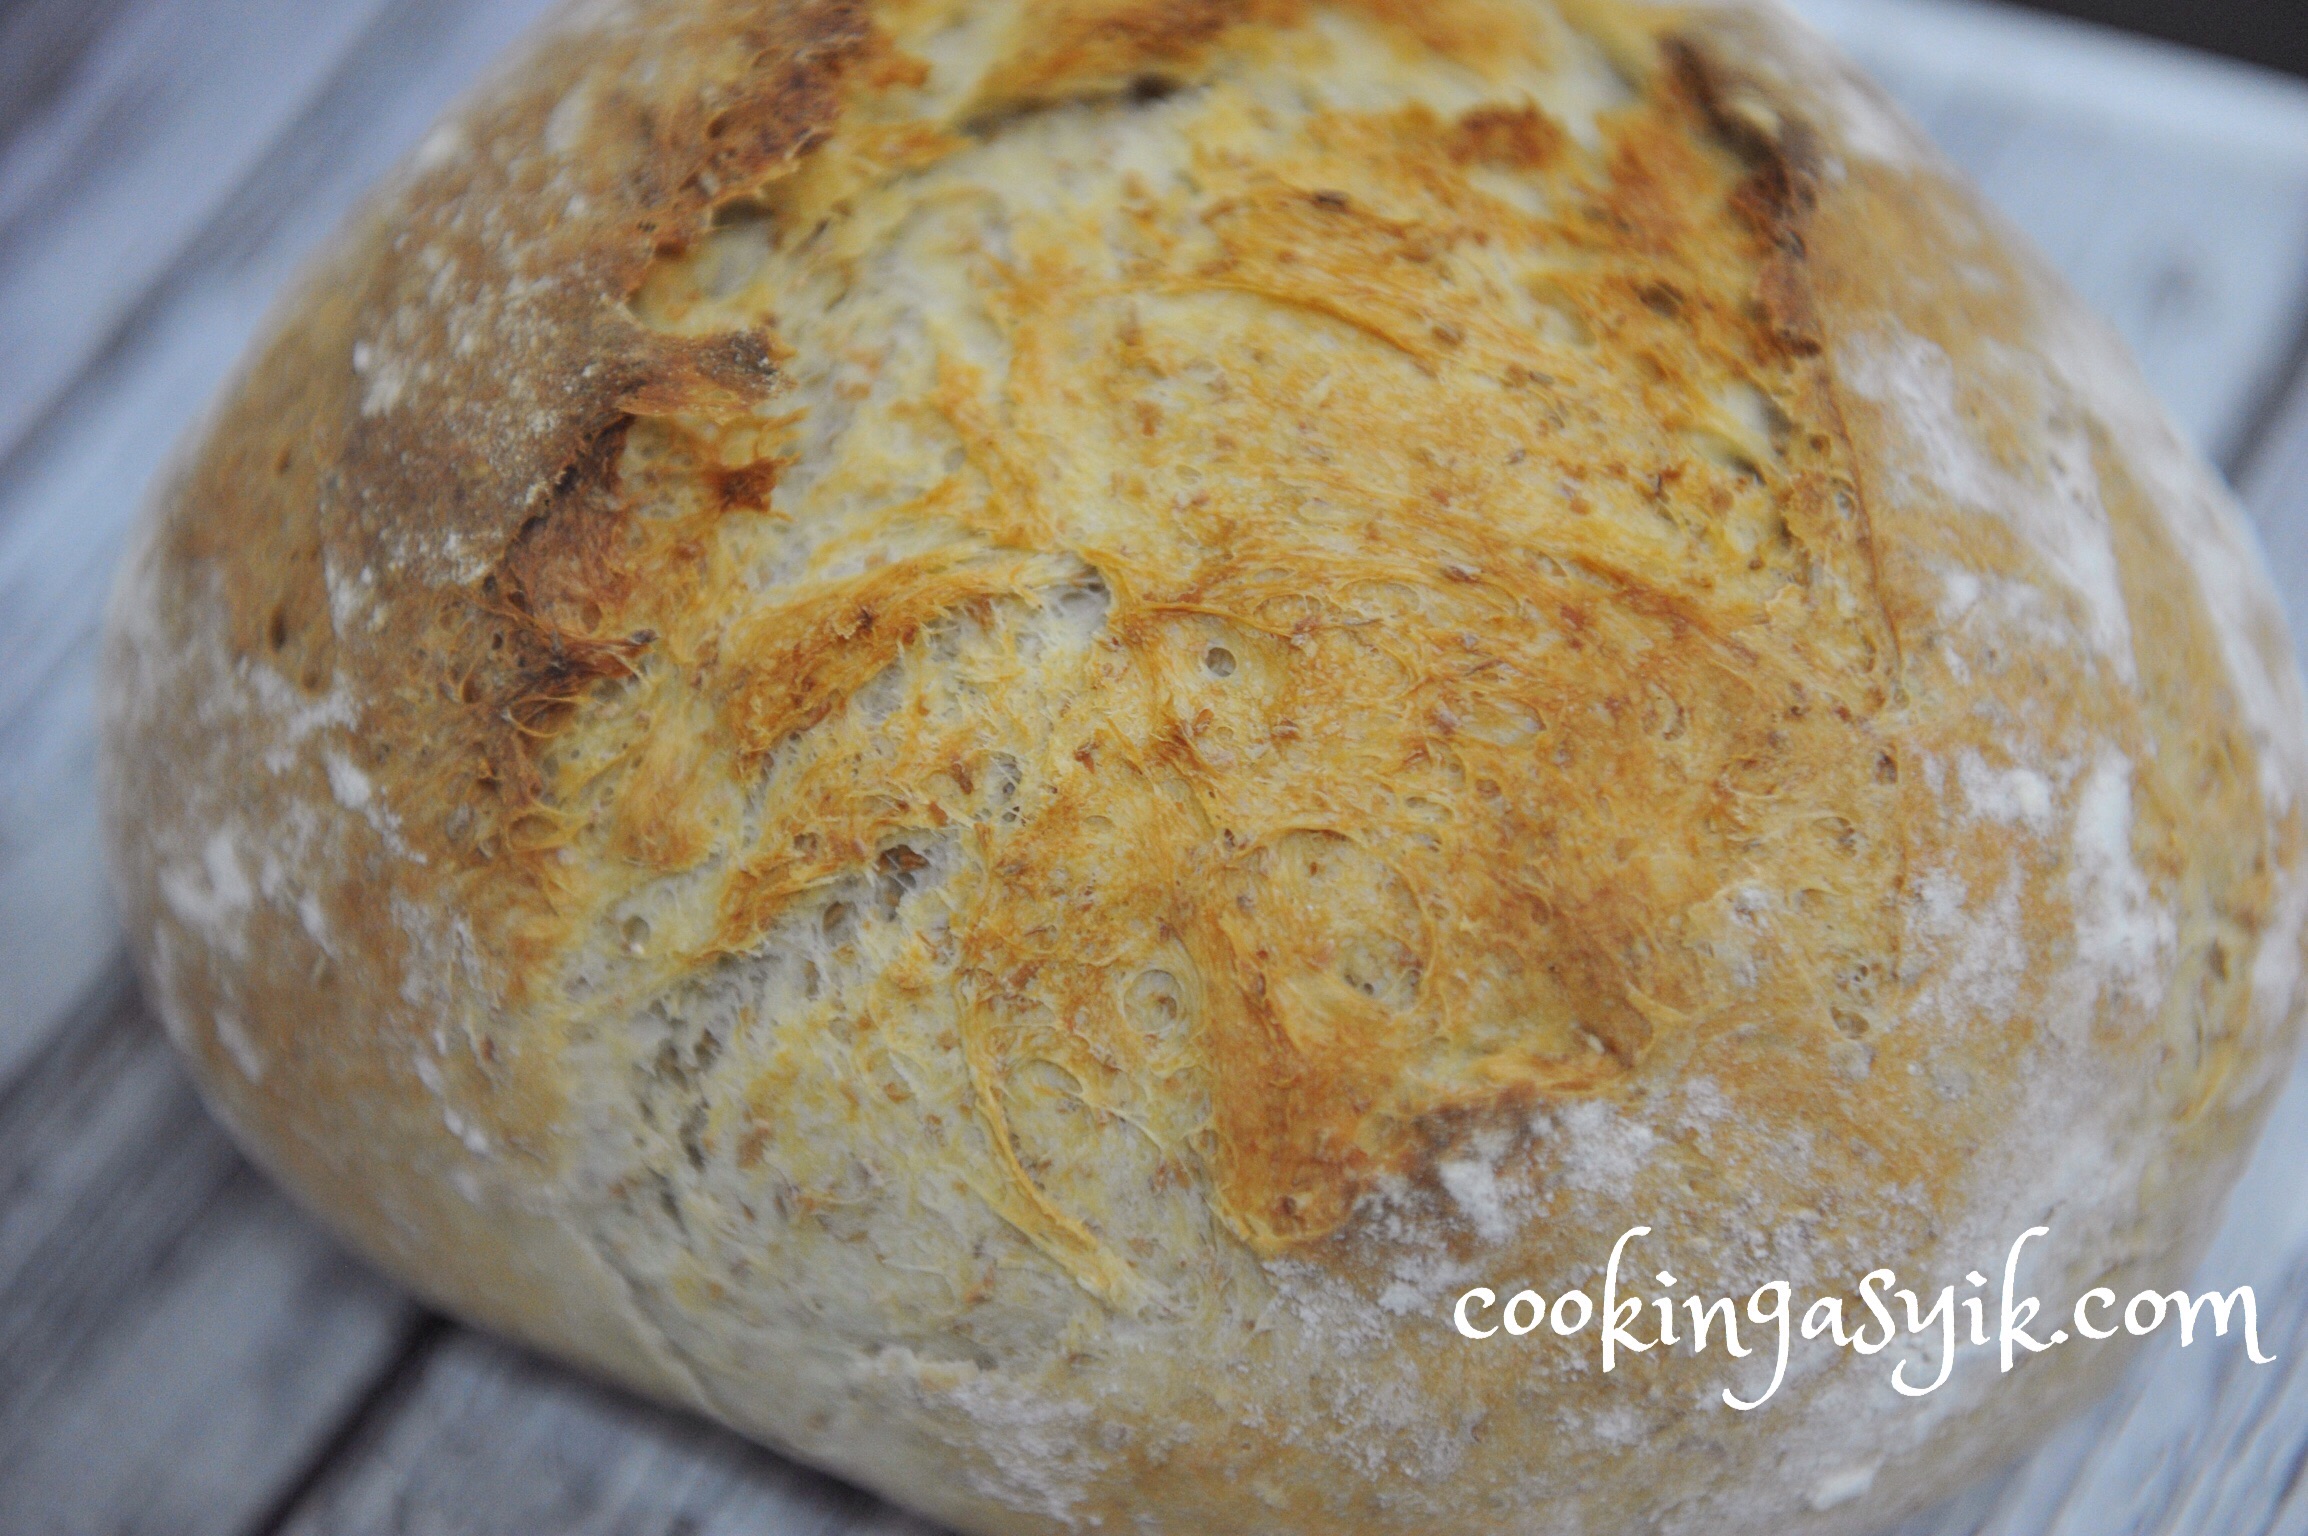 resep roti mudah, roti baguette, roti garlic, garlic bread, roti tanpa telur, roti tanpa susu, roti jadul, mixer, proofing, roti wheat bran